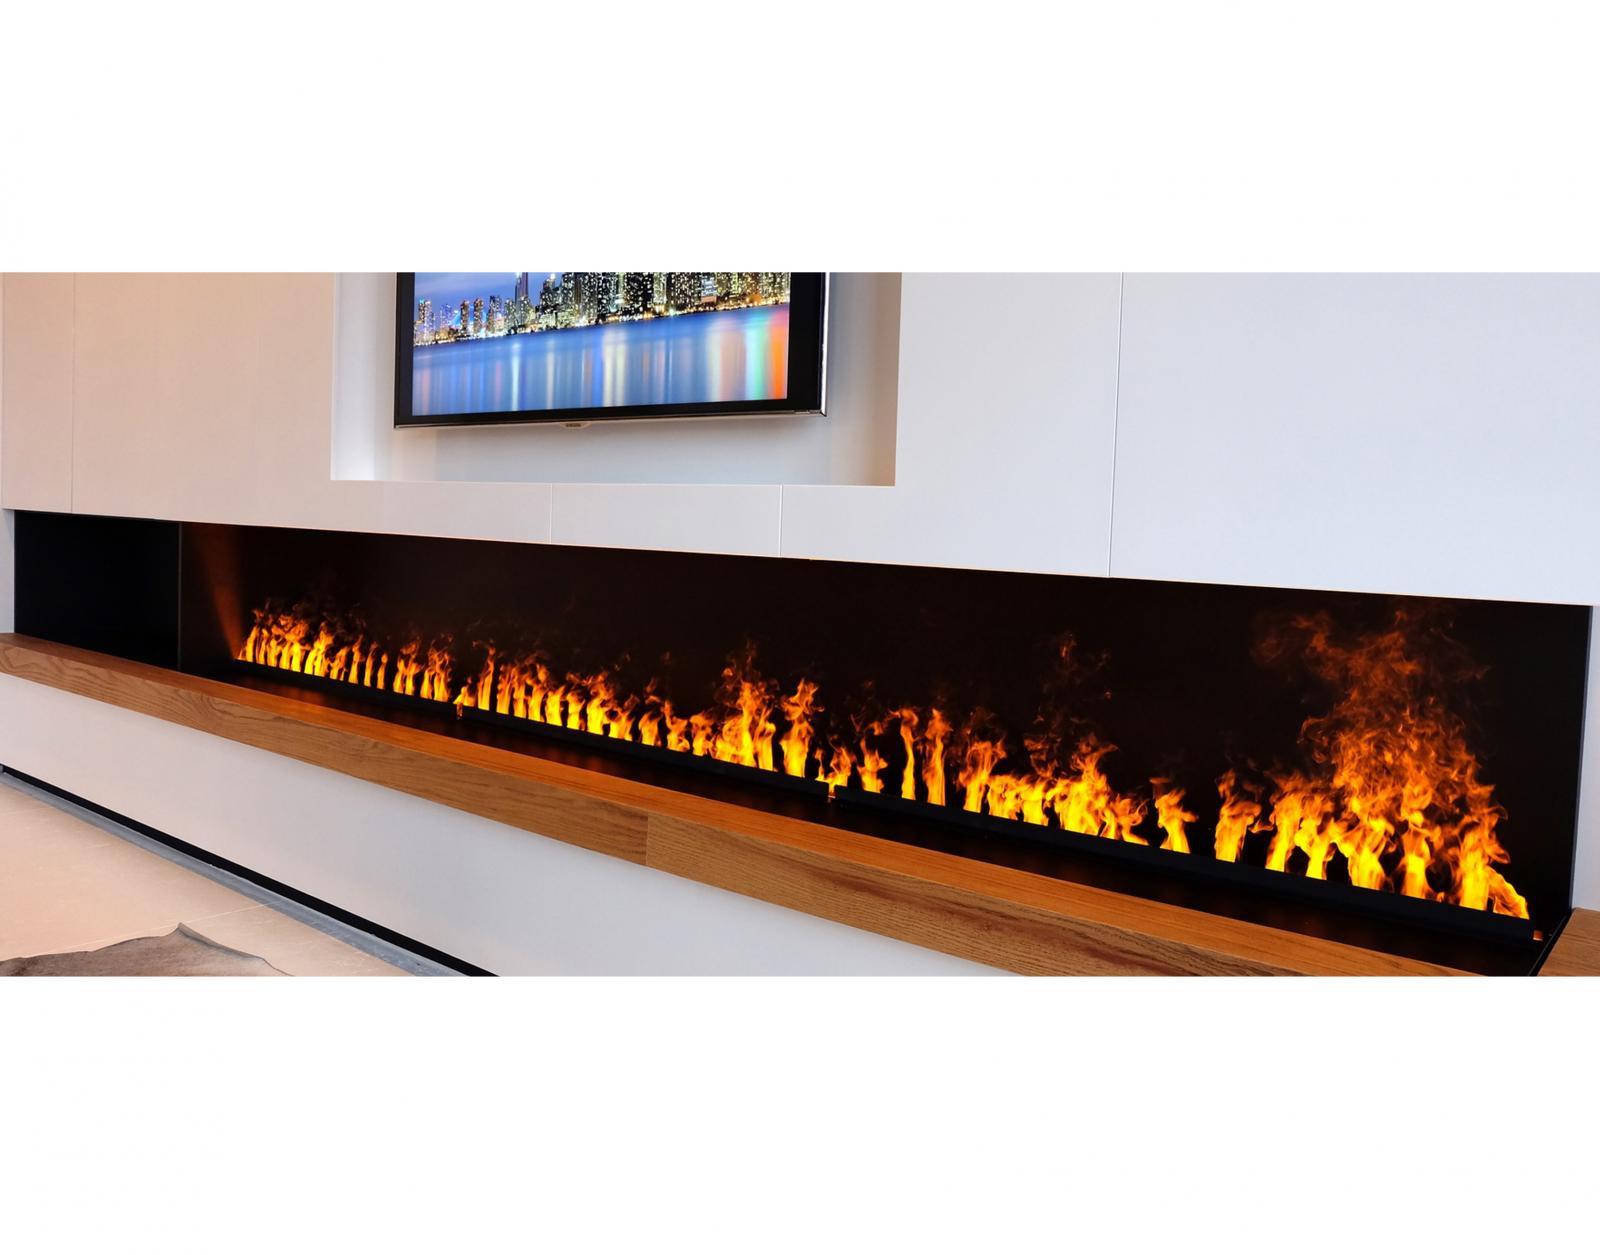 Water fireplace 3000